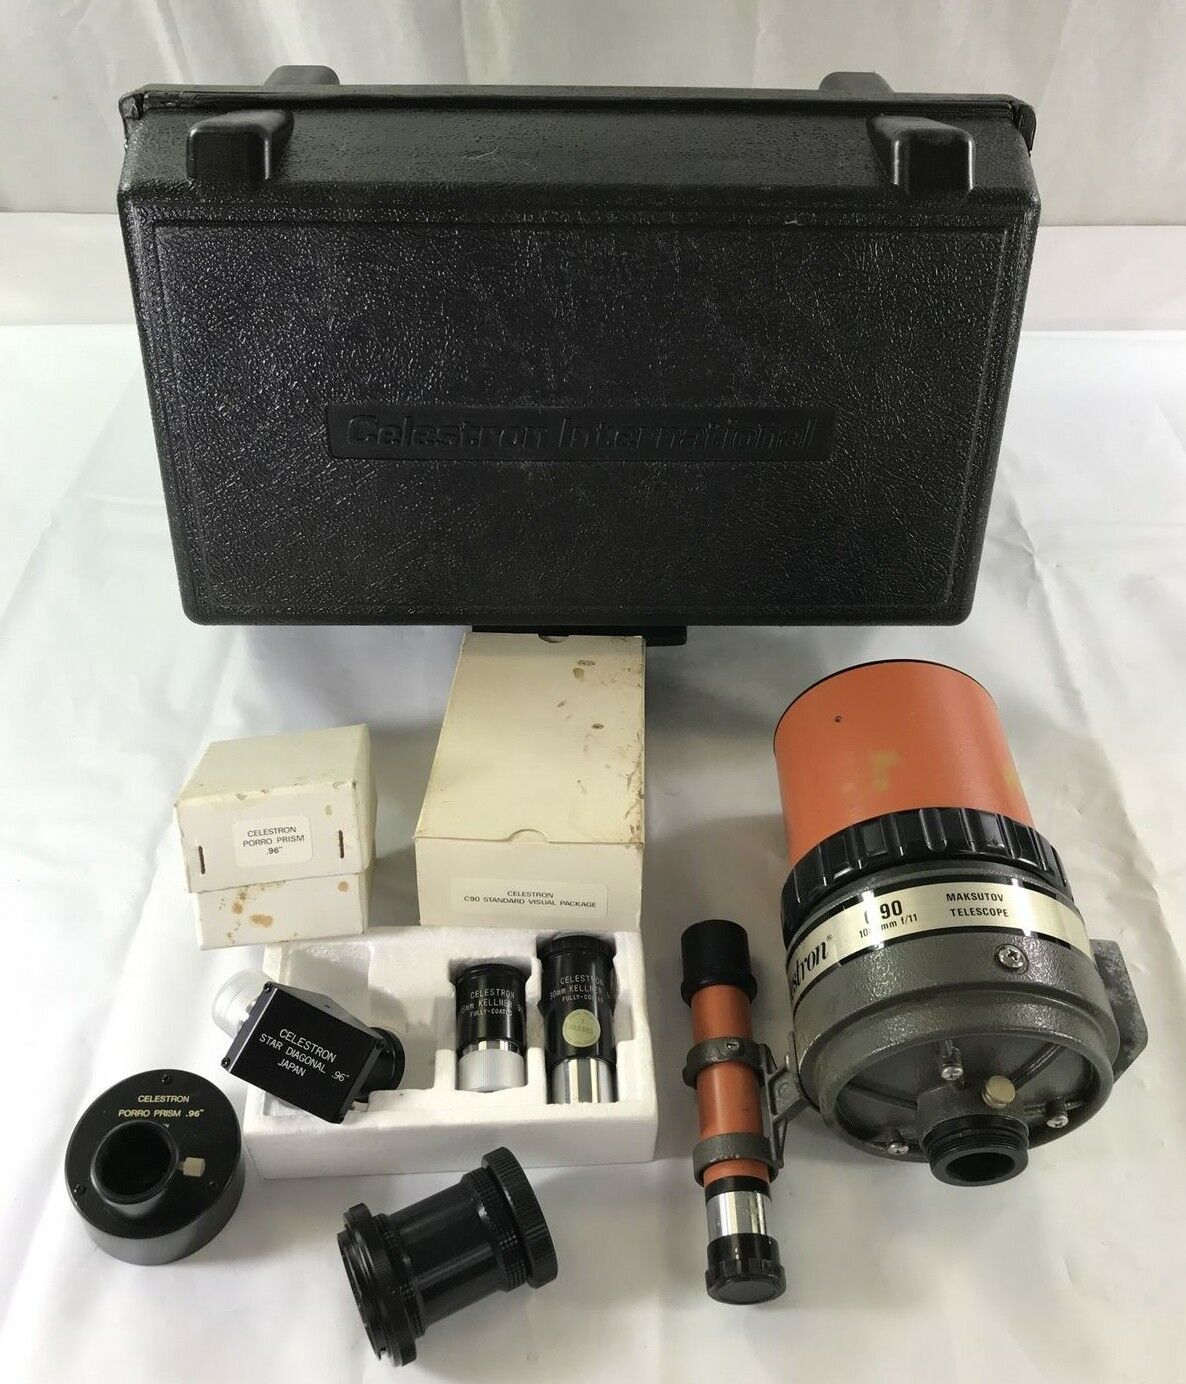 Celestron Maksutov Telescope Model C90 1000mm f/11 With Accessories and Case